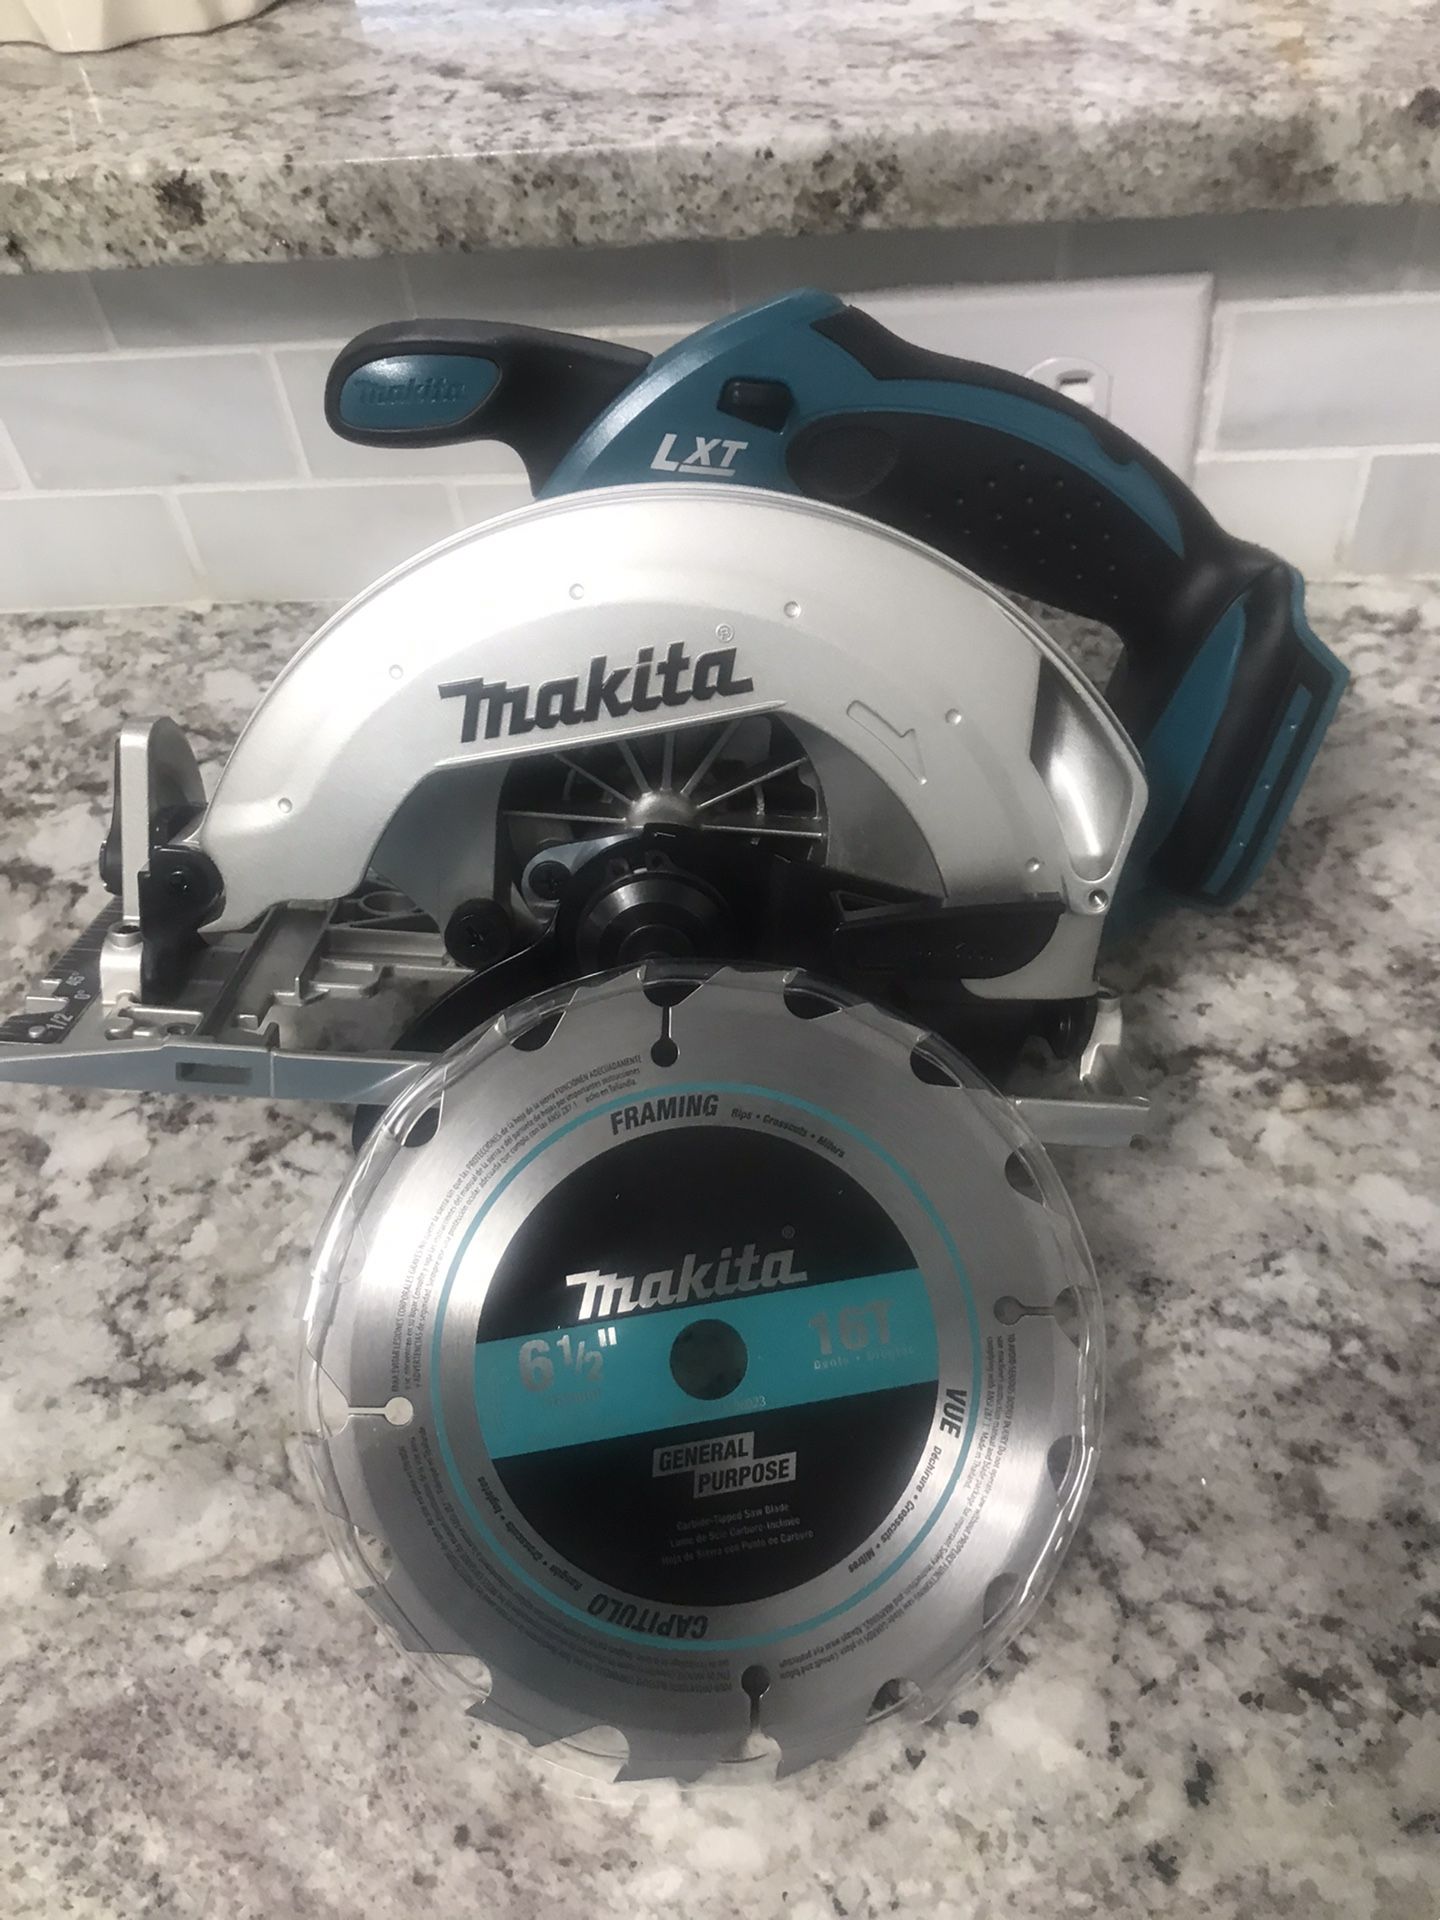 New makita circular saw (tool only).$70.Firm